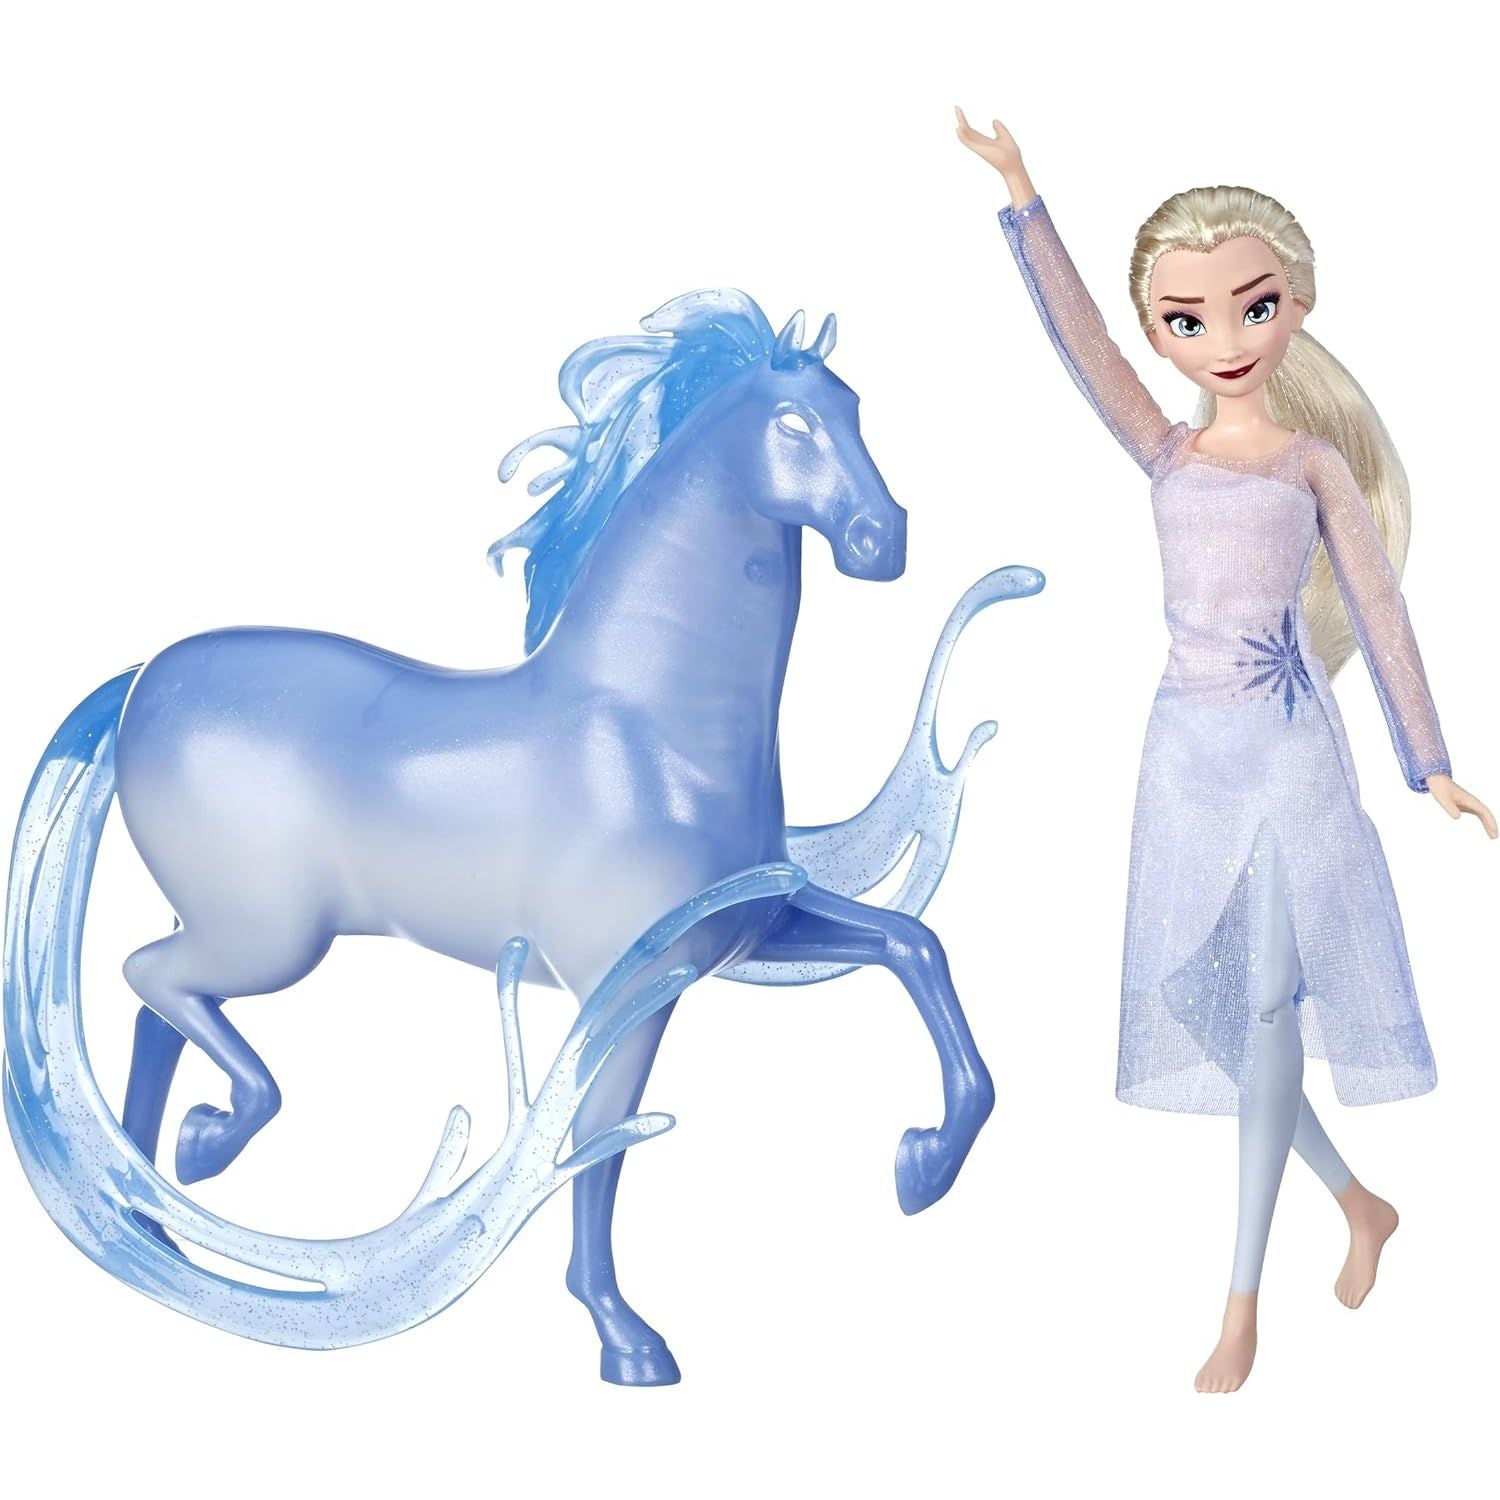 Disney Frozen 2 Elsa Doll and The Nokk Figure, Toy for Kids 3 and Up Toys - Sabat Deals630509859276